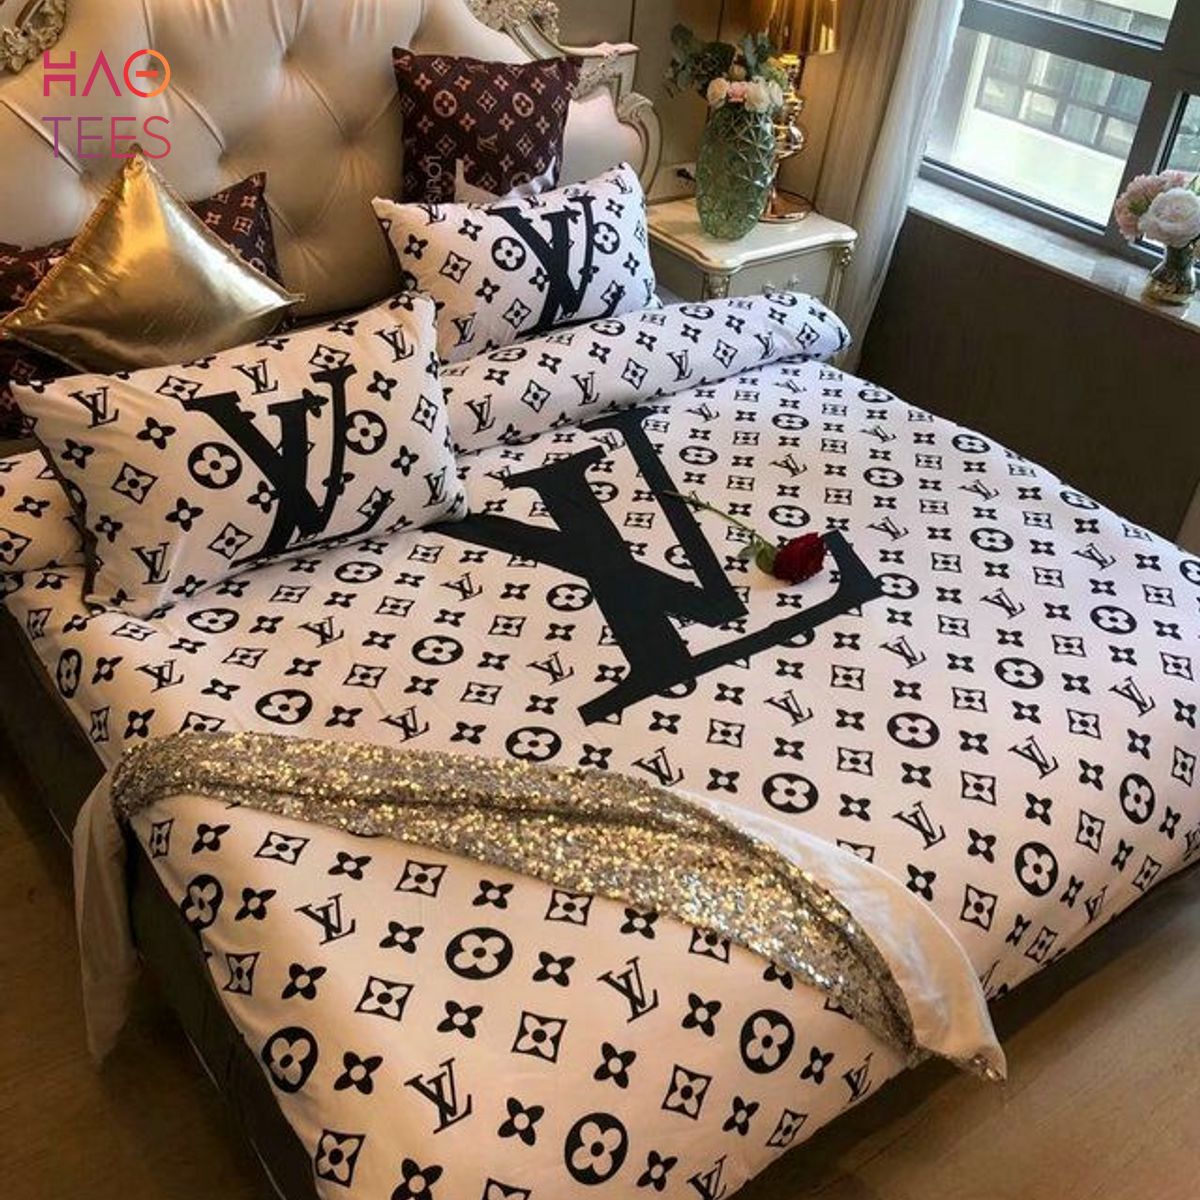 Louis Vuitton Hot Luxury Brand Bedding Set Bedspread Duvet Cover Set Home  Decor  ベッドセット, 寝室インテリアのアイデア, 布団カバーセット